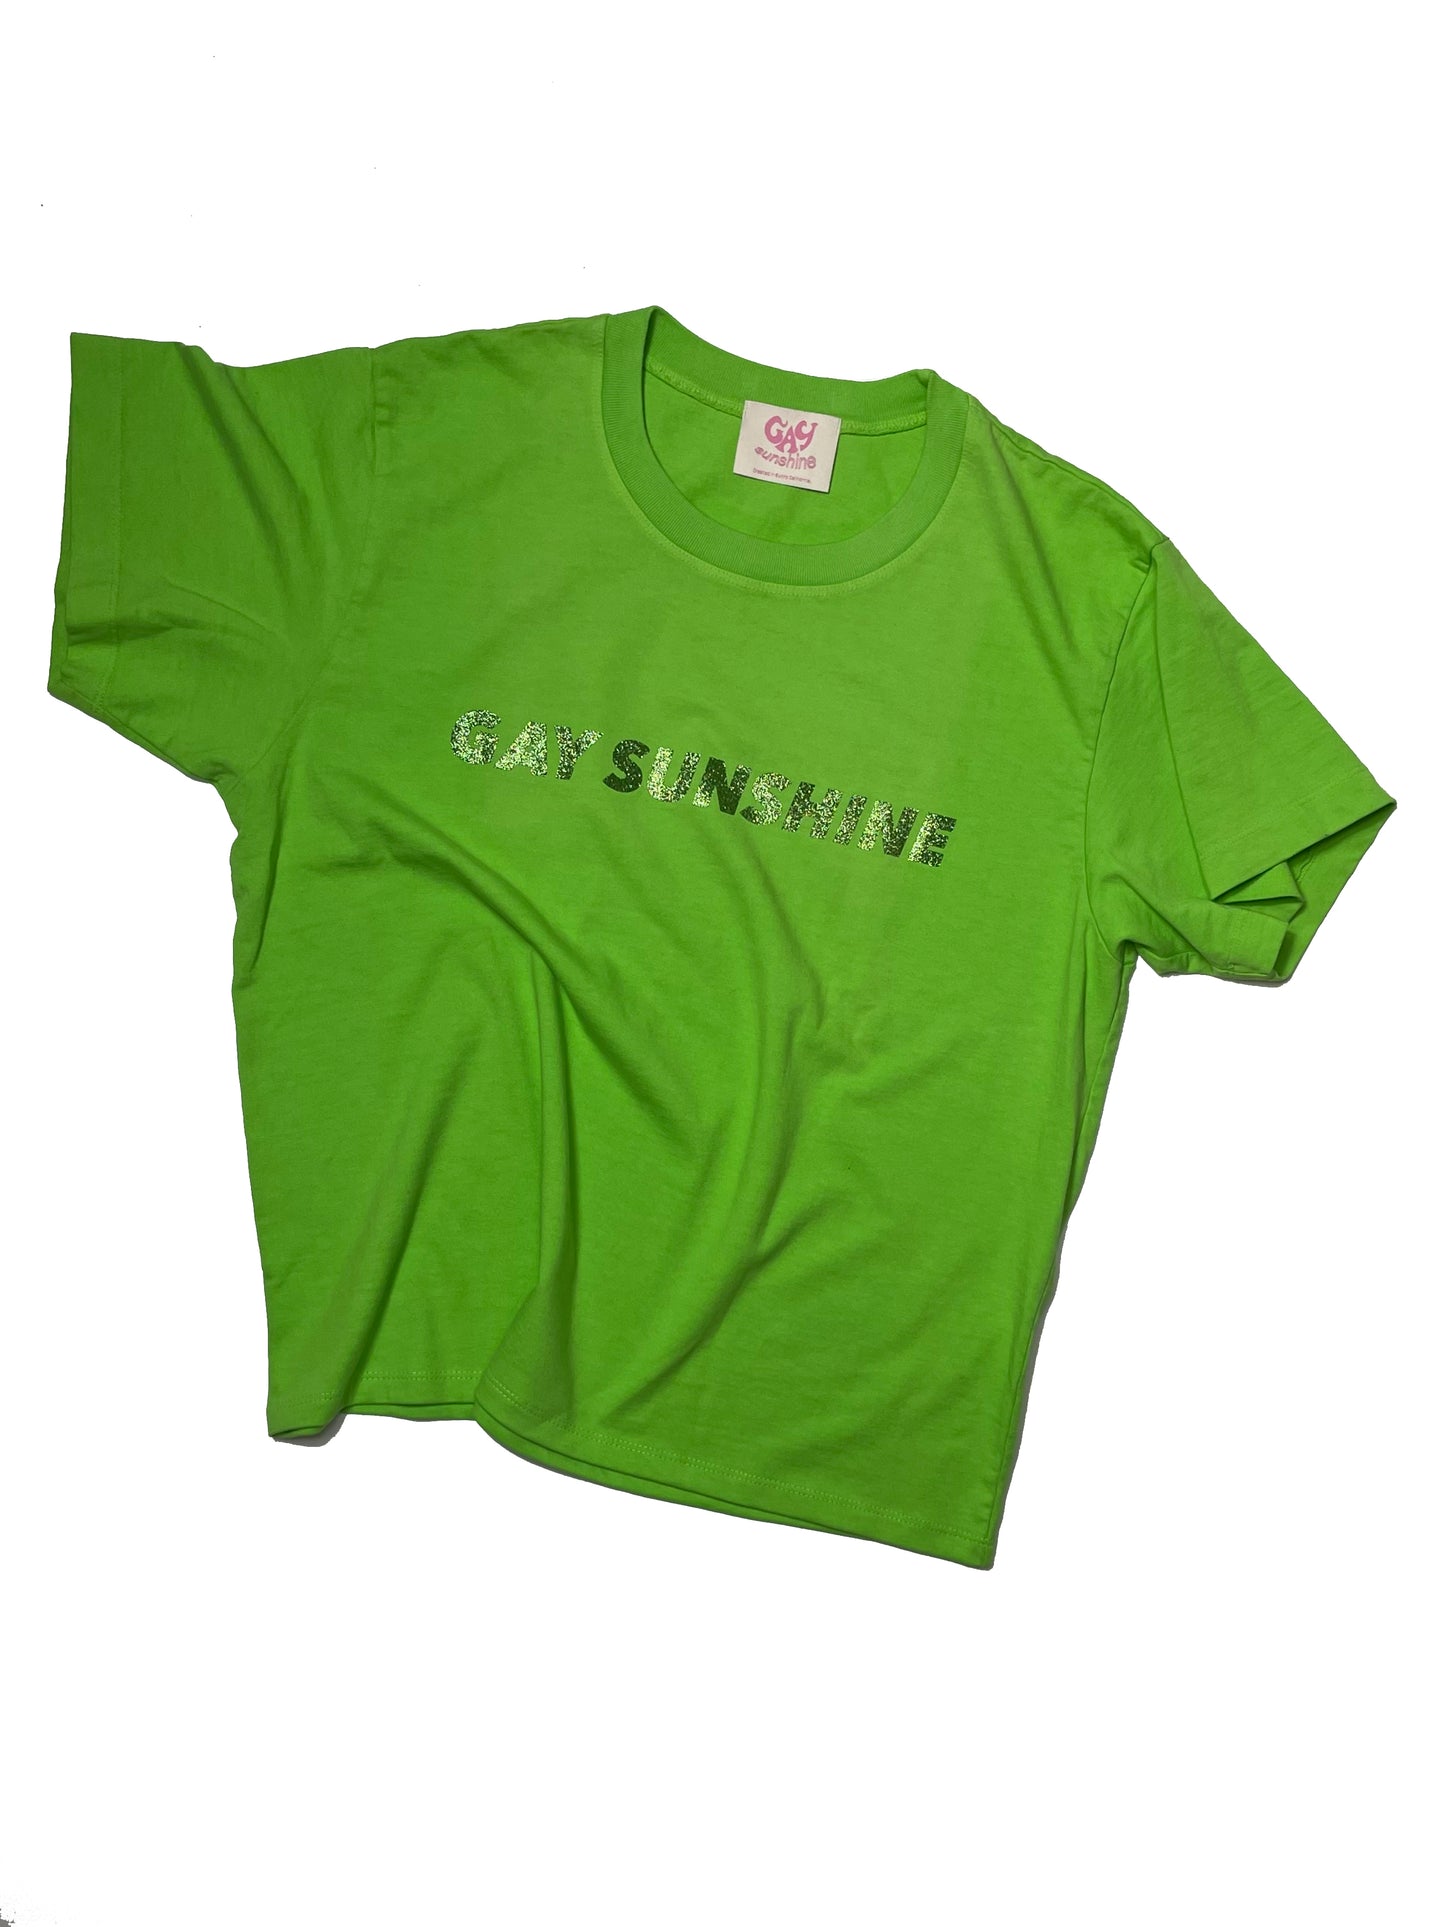 The Green Glitter Logo Tee